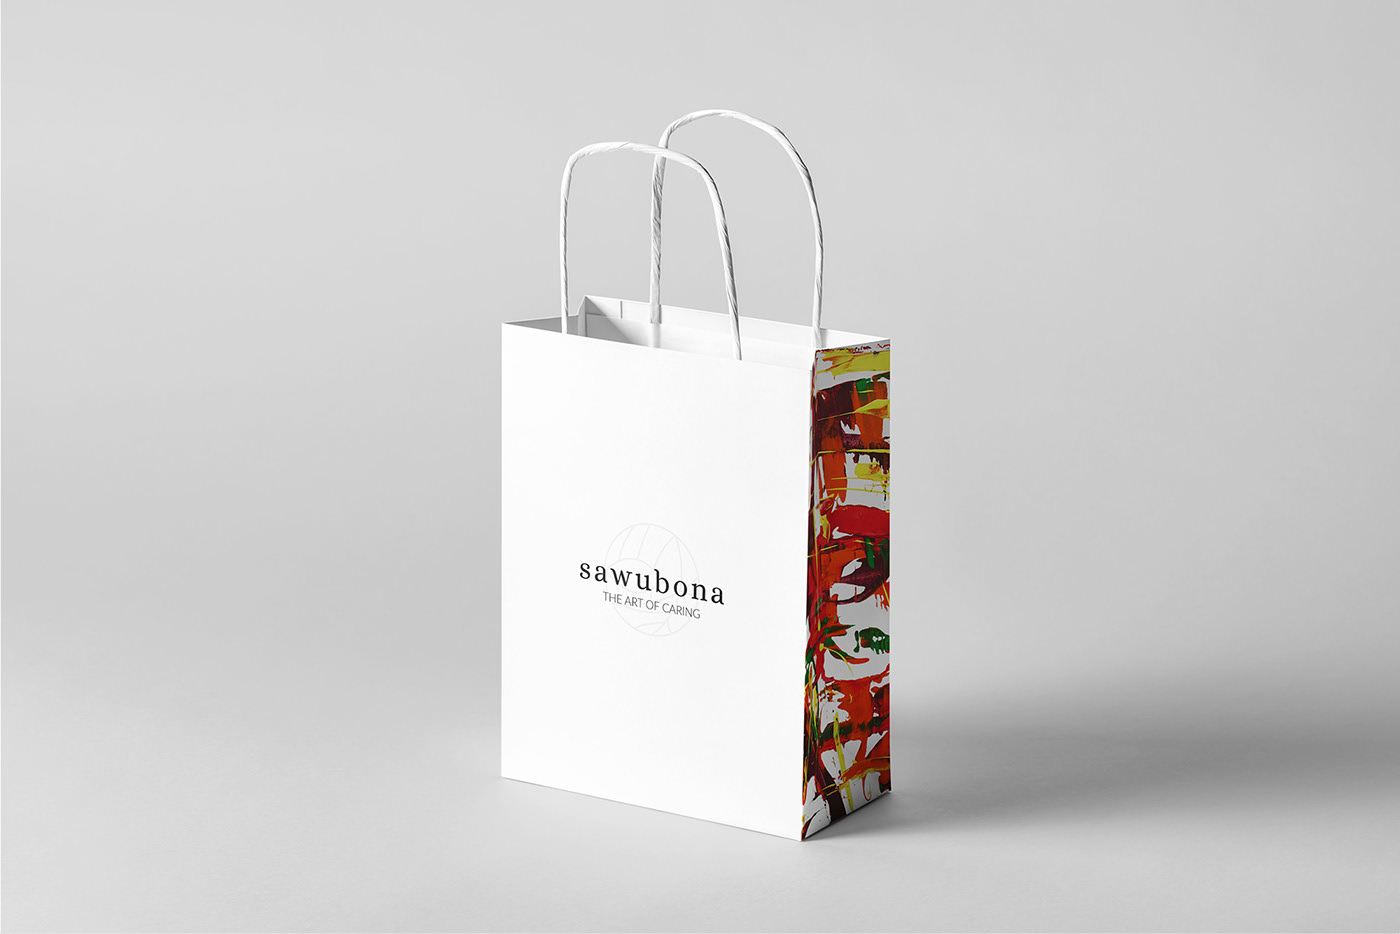 Sawubona: branding & packaging concept on Behance